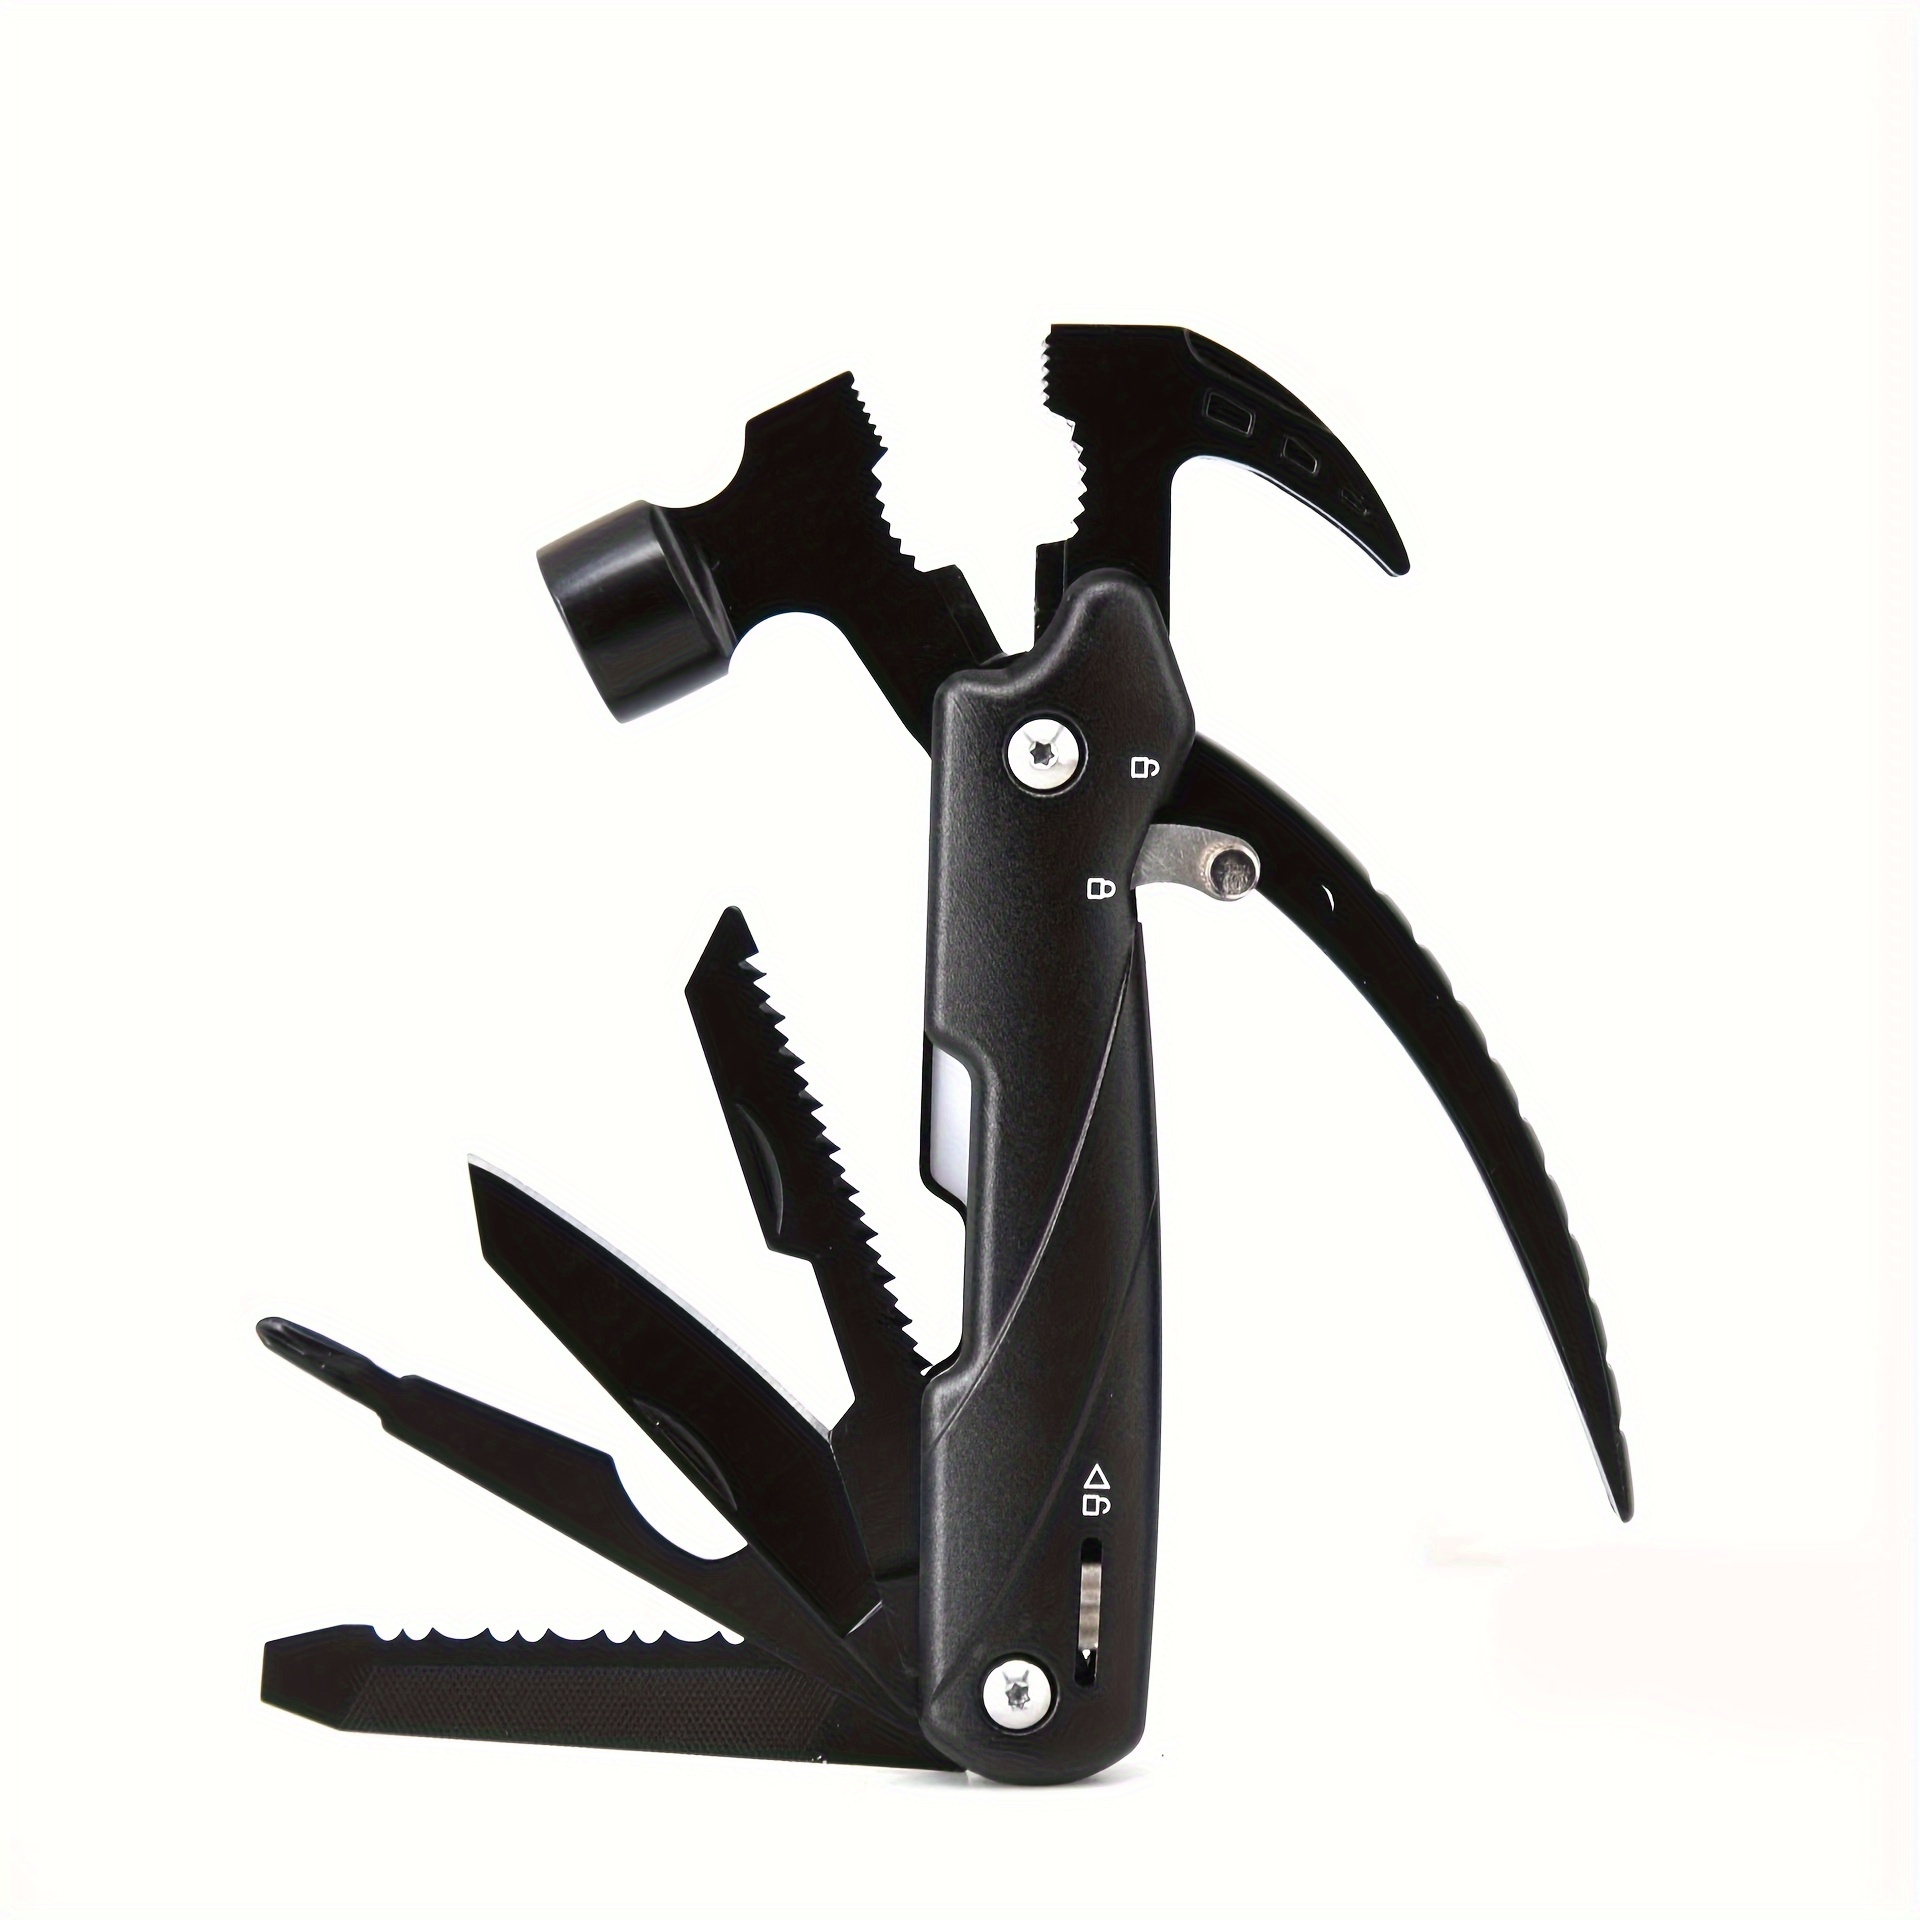 Multipurpose Tool, Wrench, Hammer, Cool Gadgets For Men